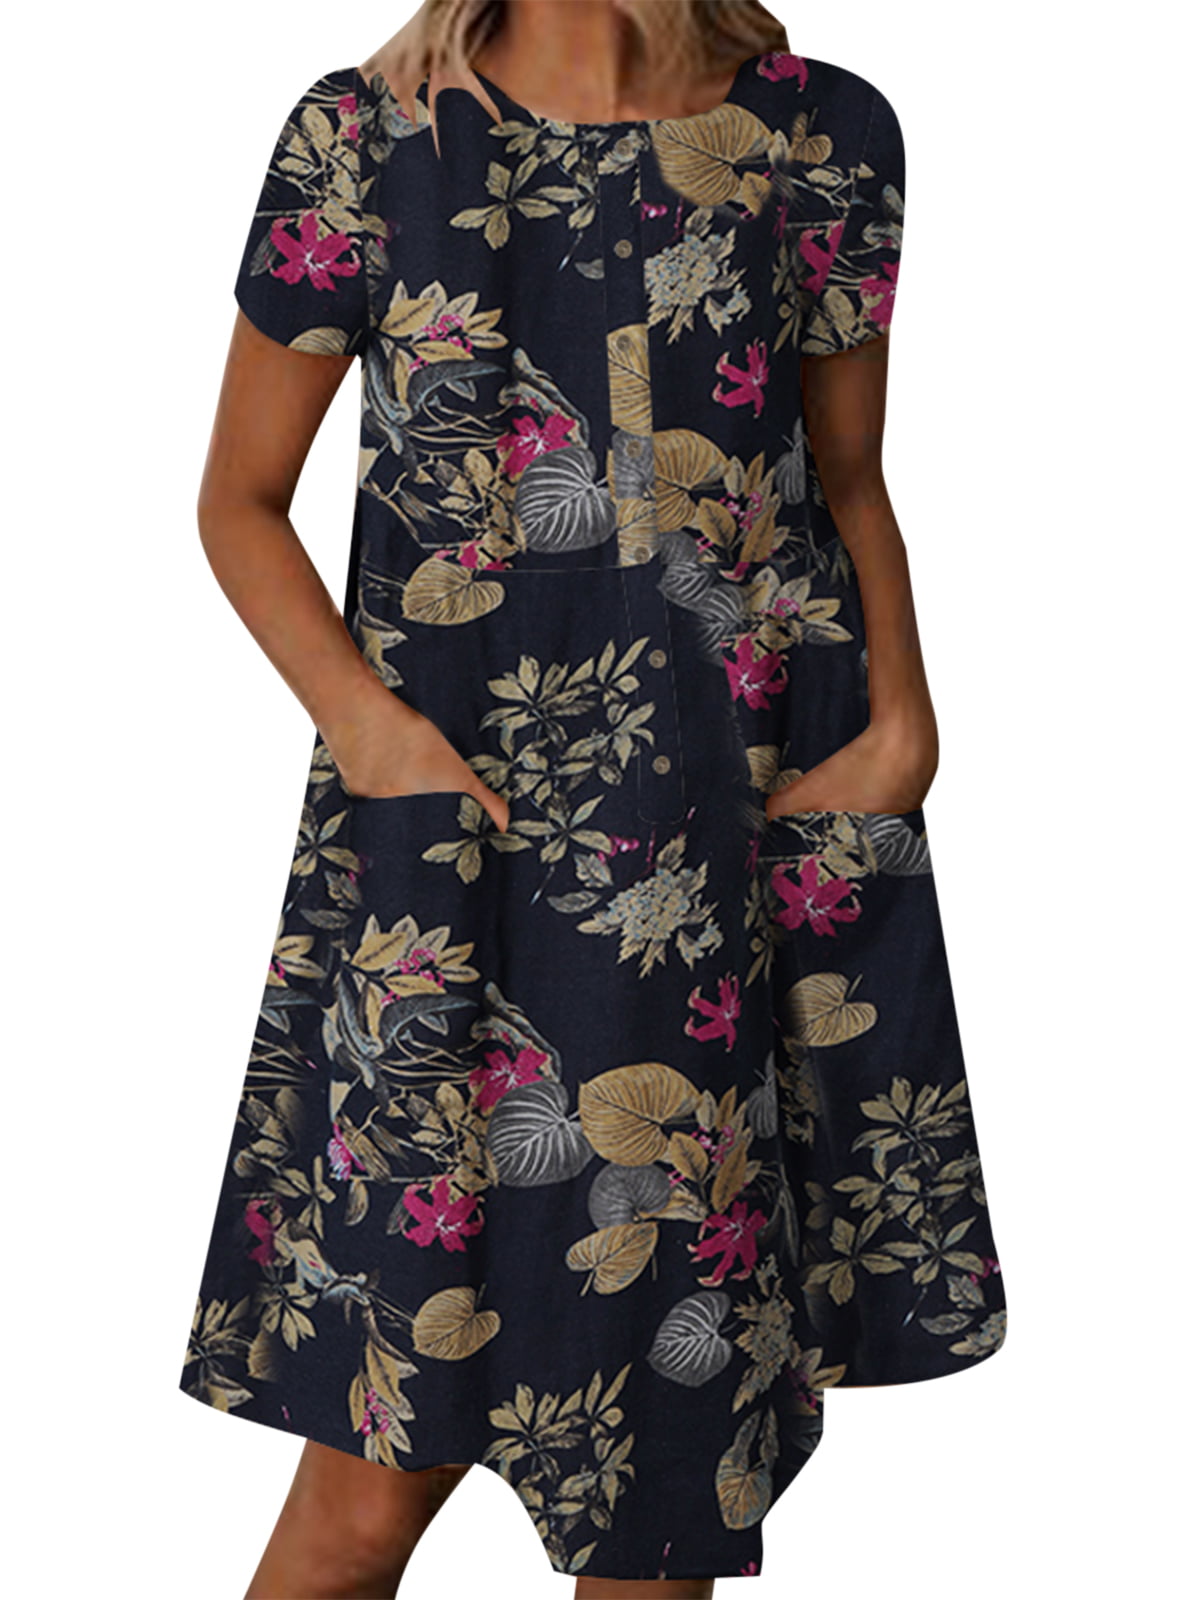 LOVOZO Short Sleeves Womens Girls Floral Print Bowknot Sleeves Mini Dress Casual 